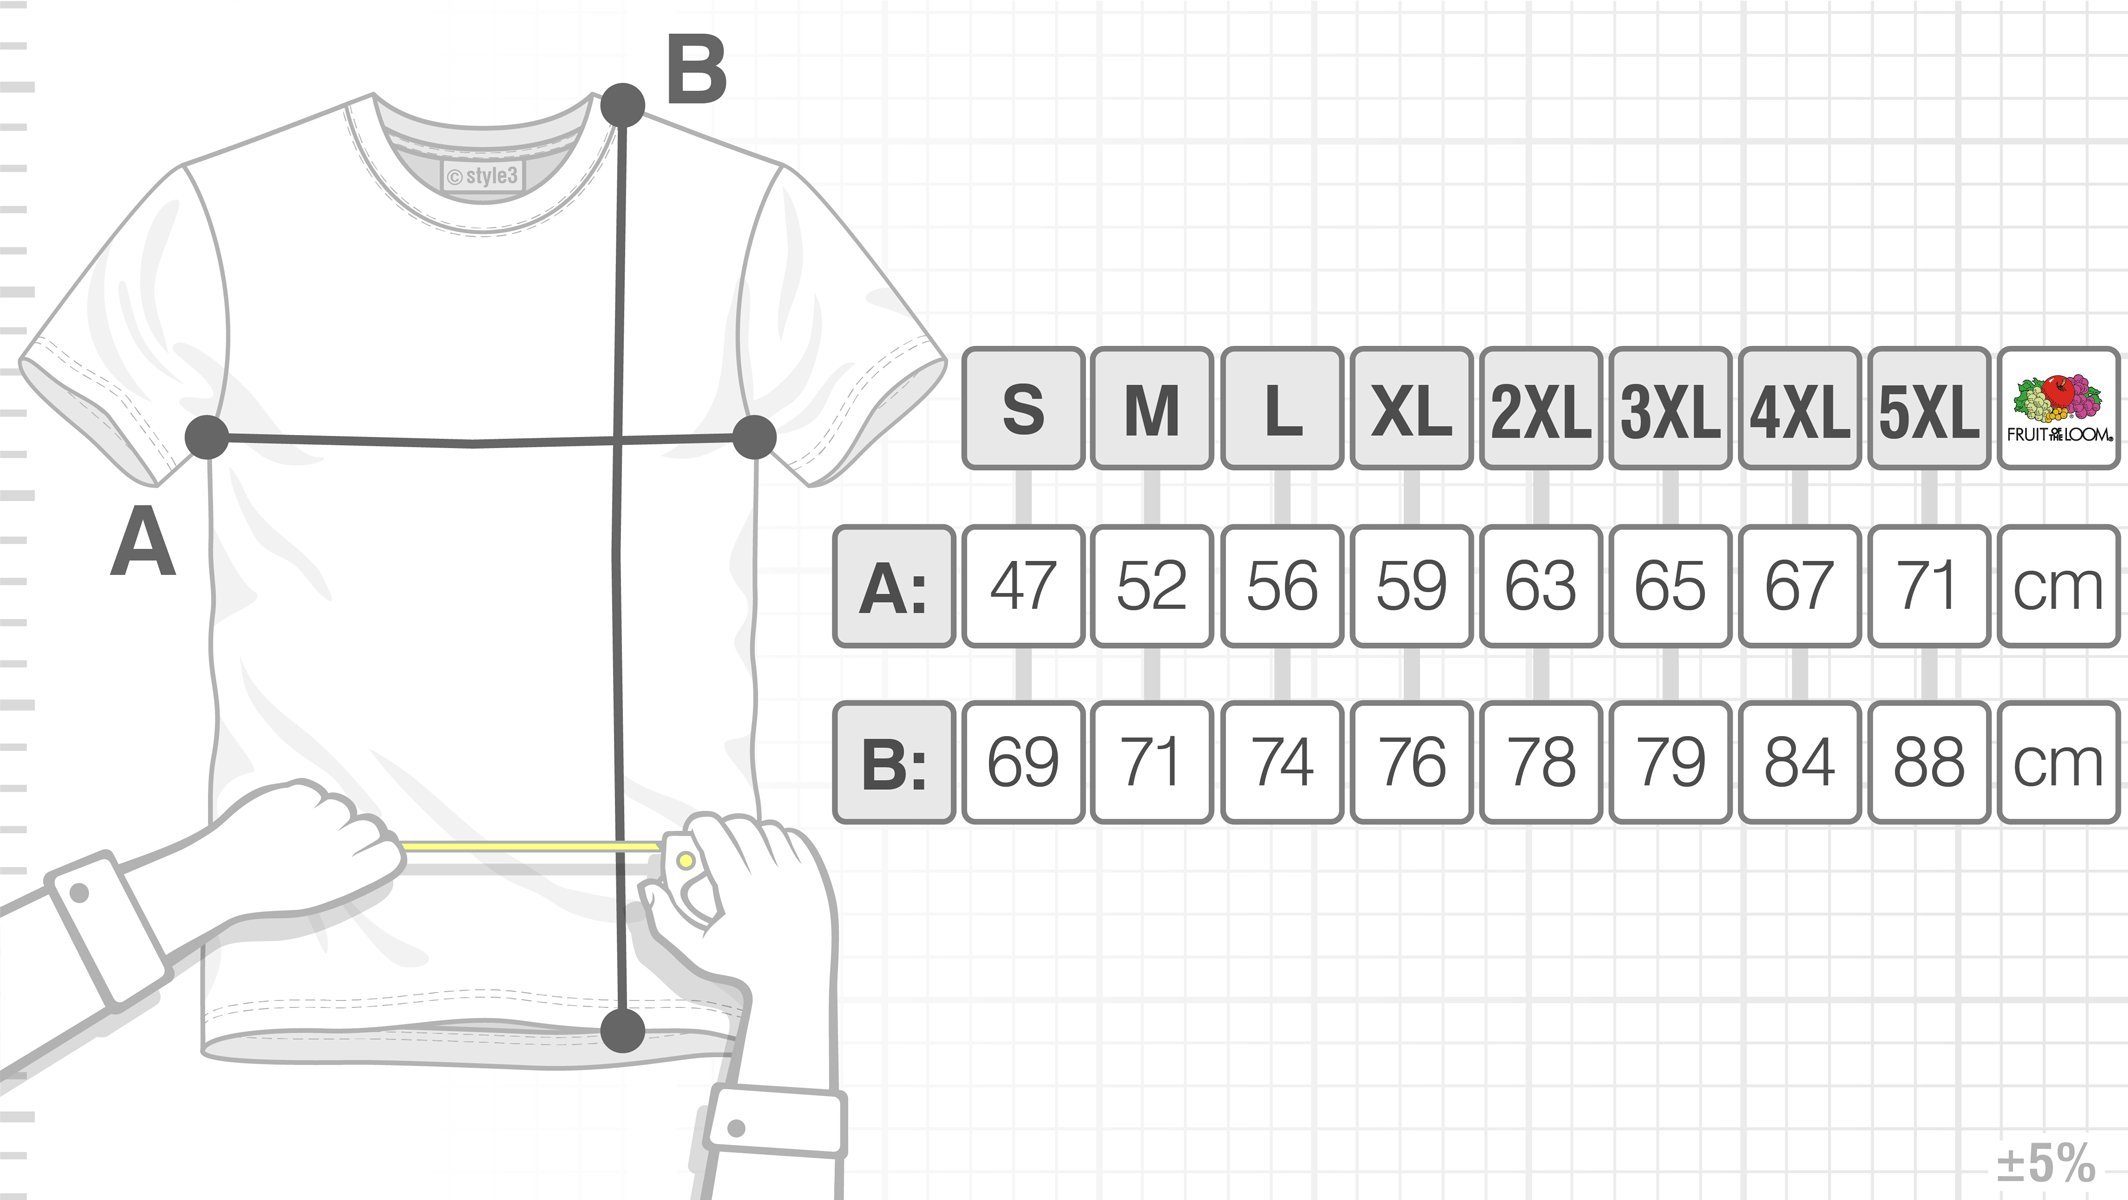 switch meliert Gamer nes Print-Shirt wii T-Shirt Herren luigi gaming 8Bit n64 boy color yoshi style3 T-Shirt classic grau retro